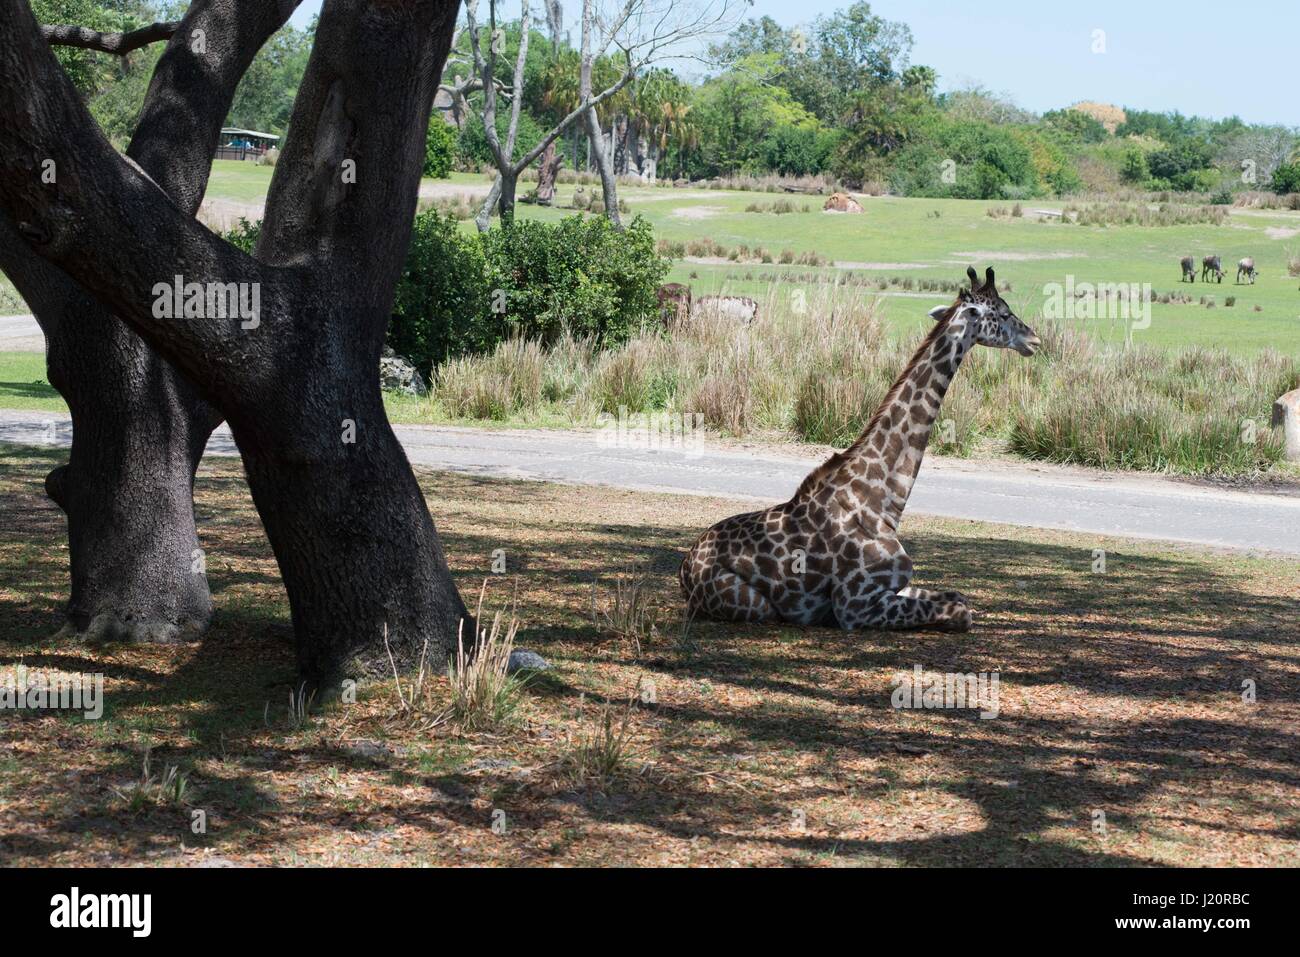 Giraffe At animal kingdom, Disney world Florida Stock Photo - Alamy